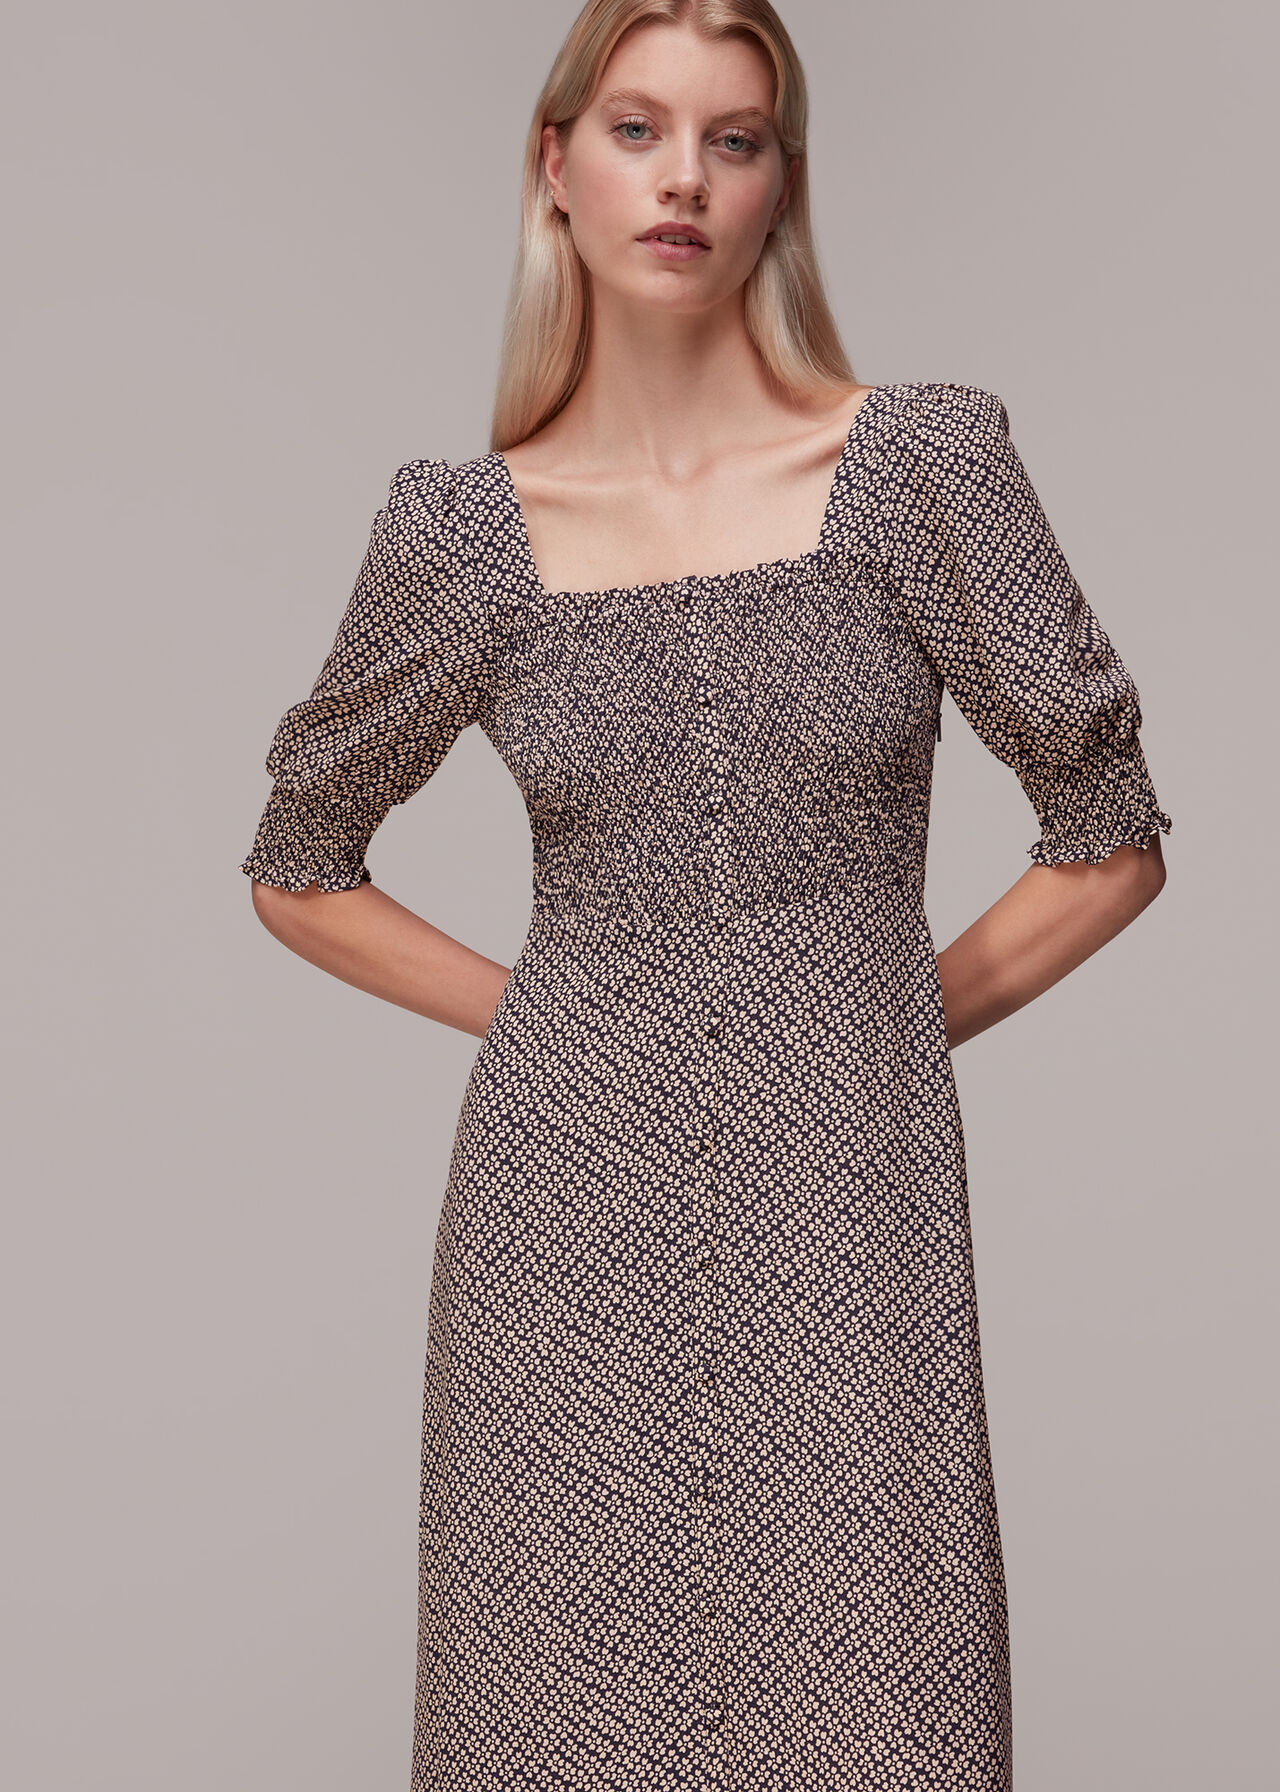 Clover Print Shirred Dress